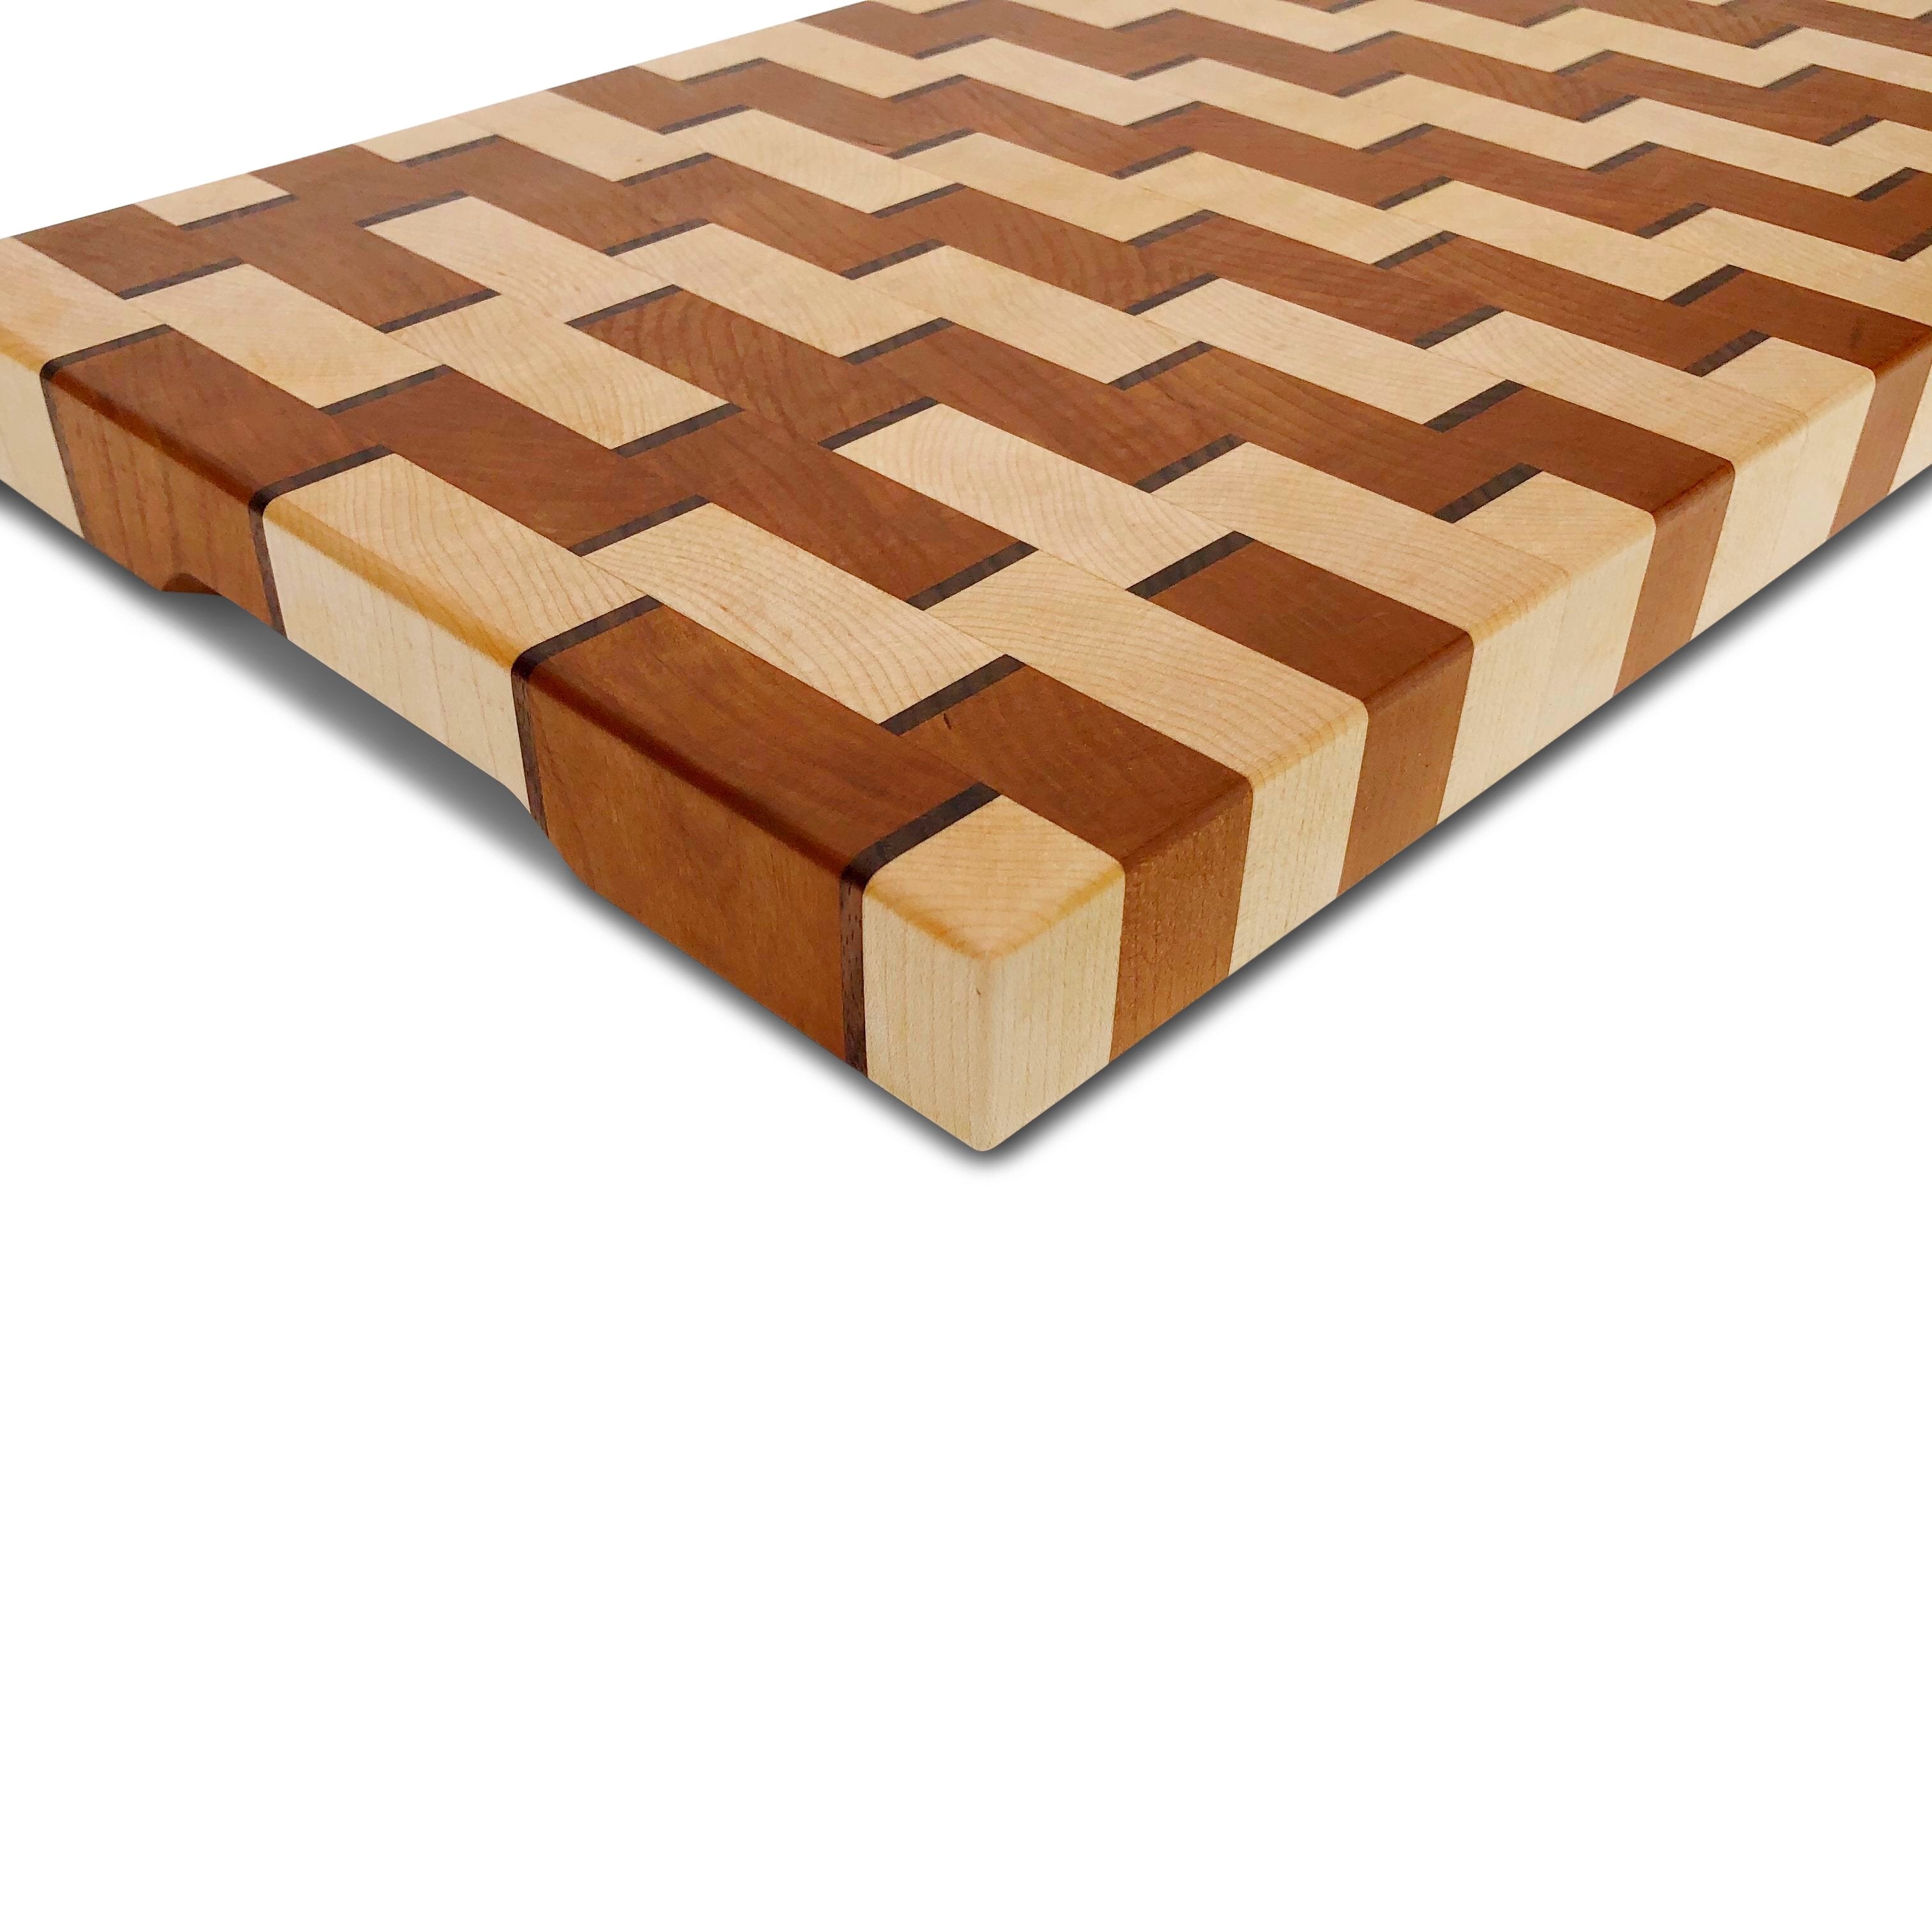 The Tetris: Cutting Board - Global Sawdust